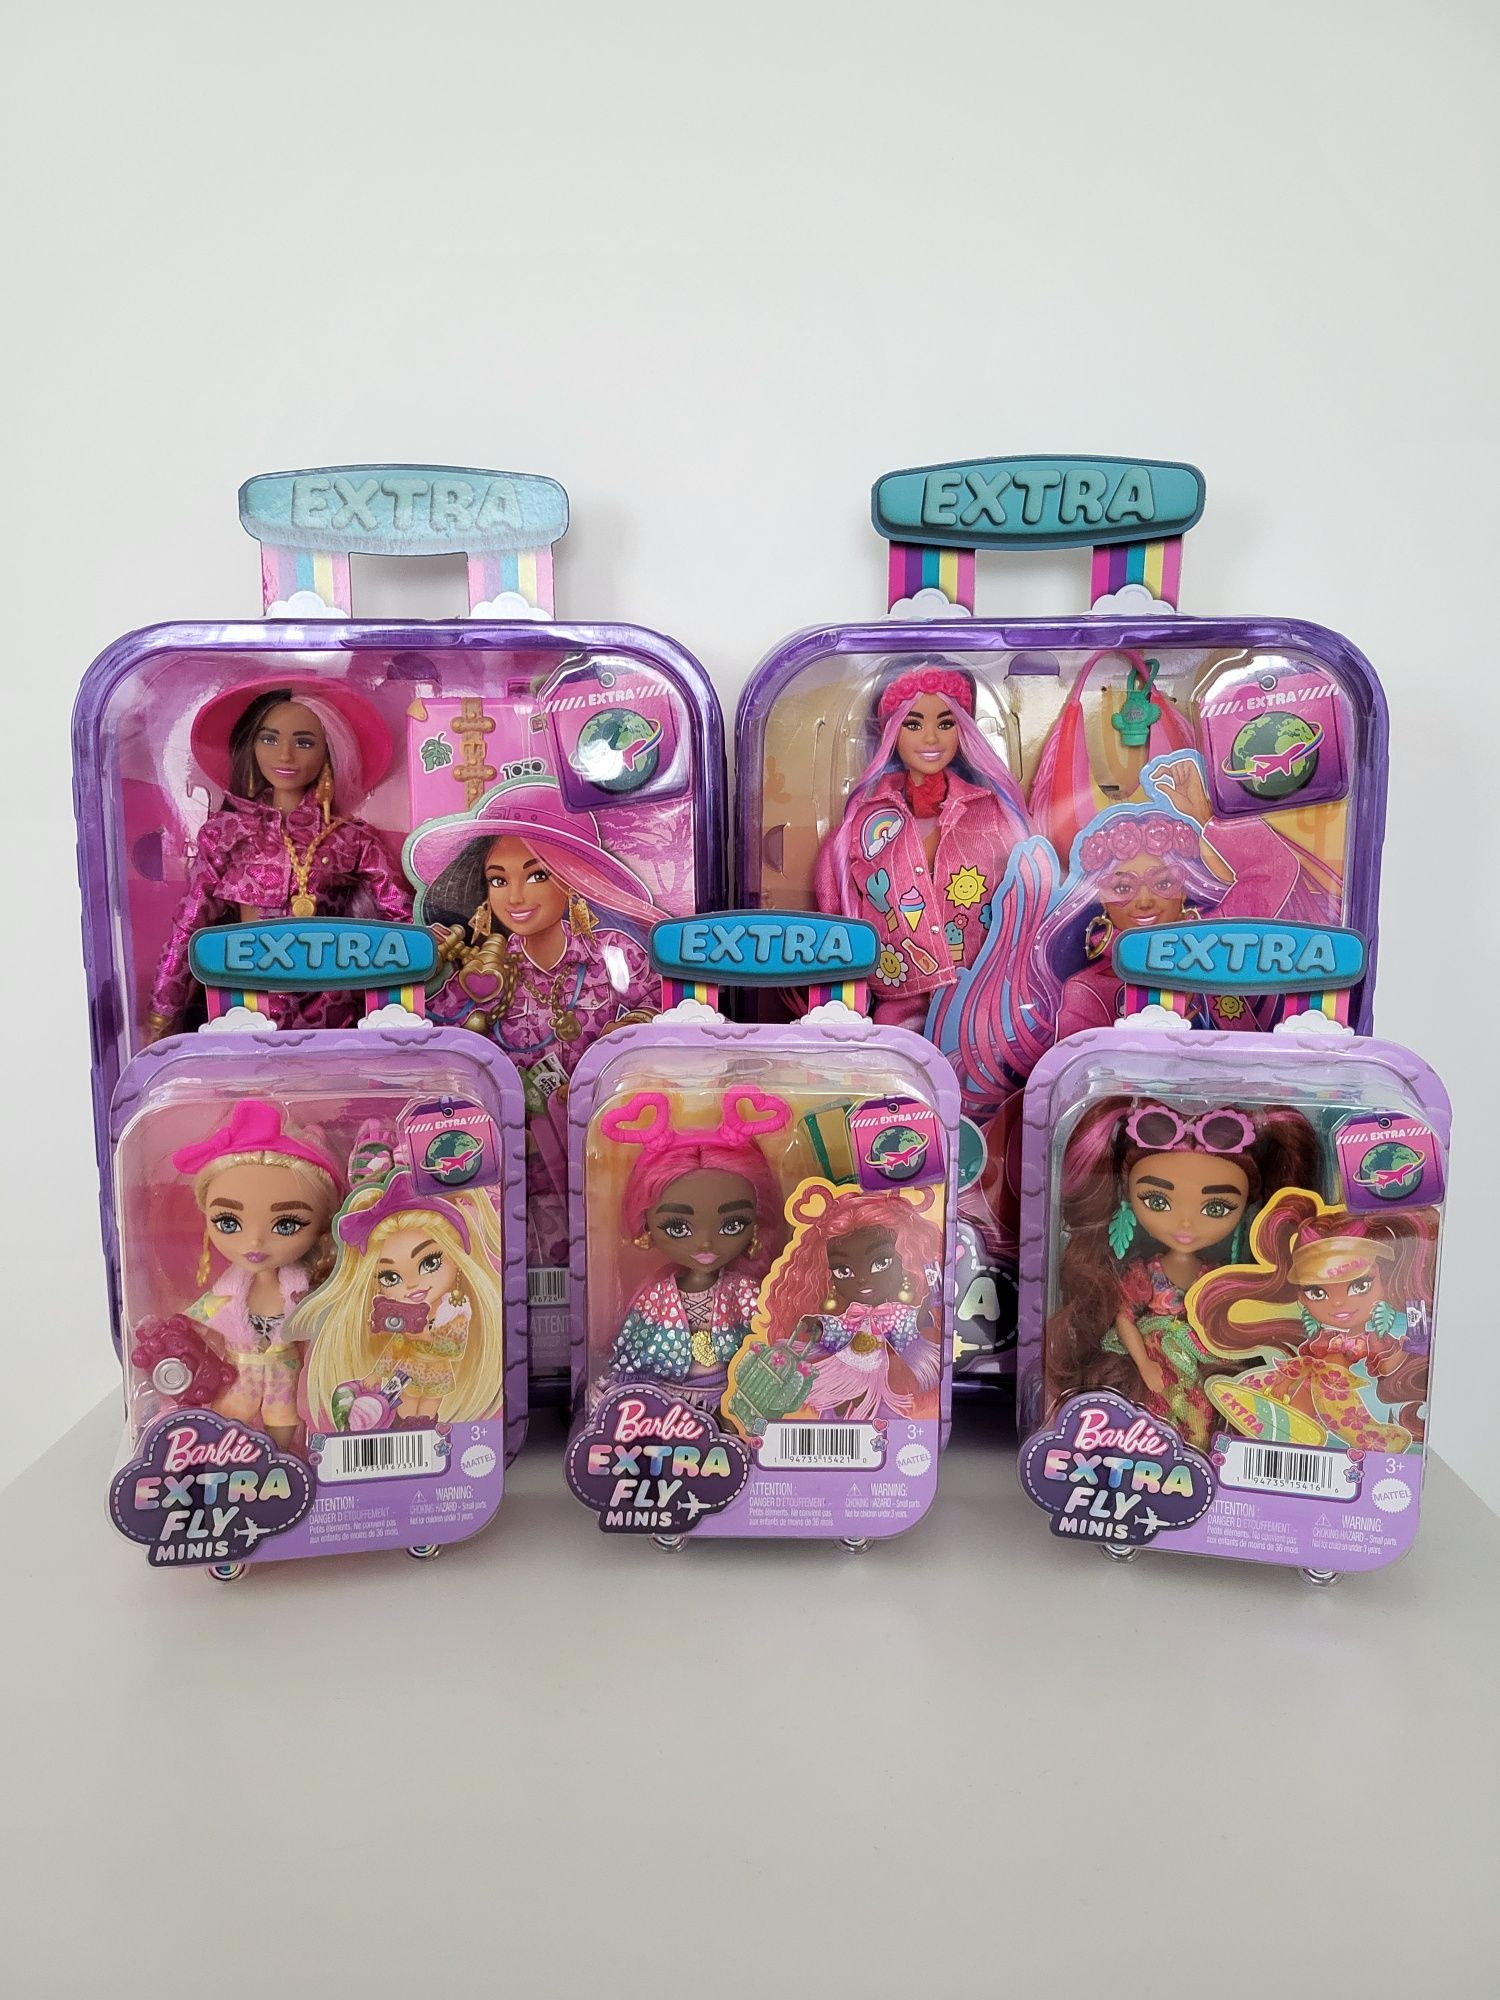 Барбі Екстра Barbie Extra